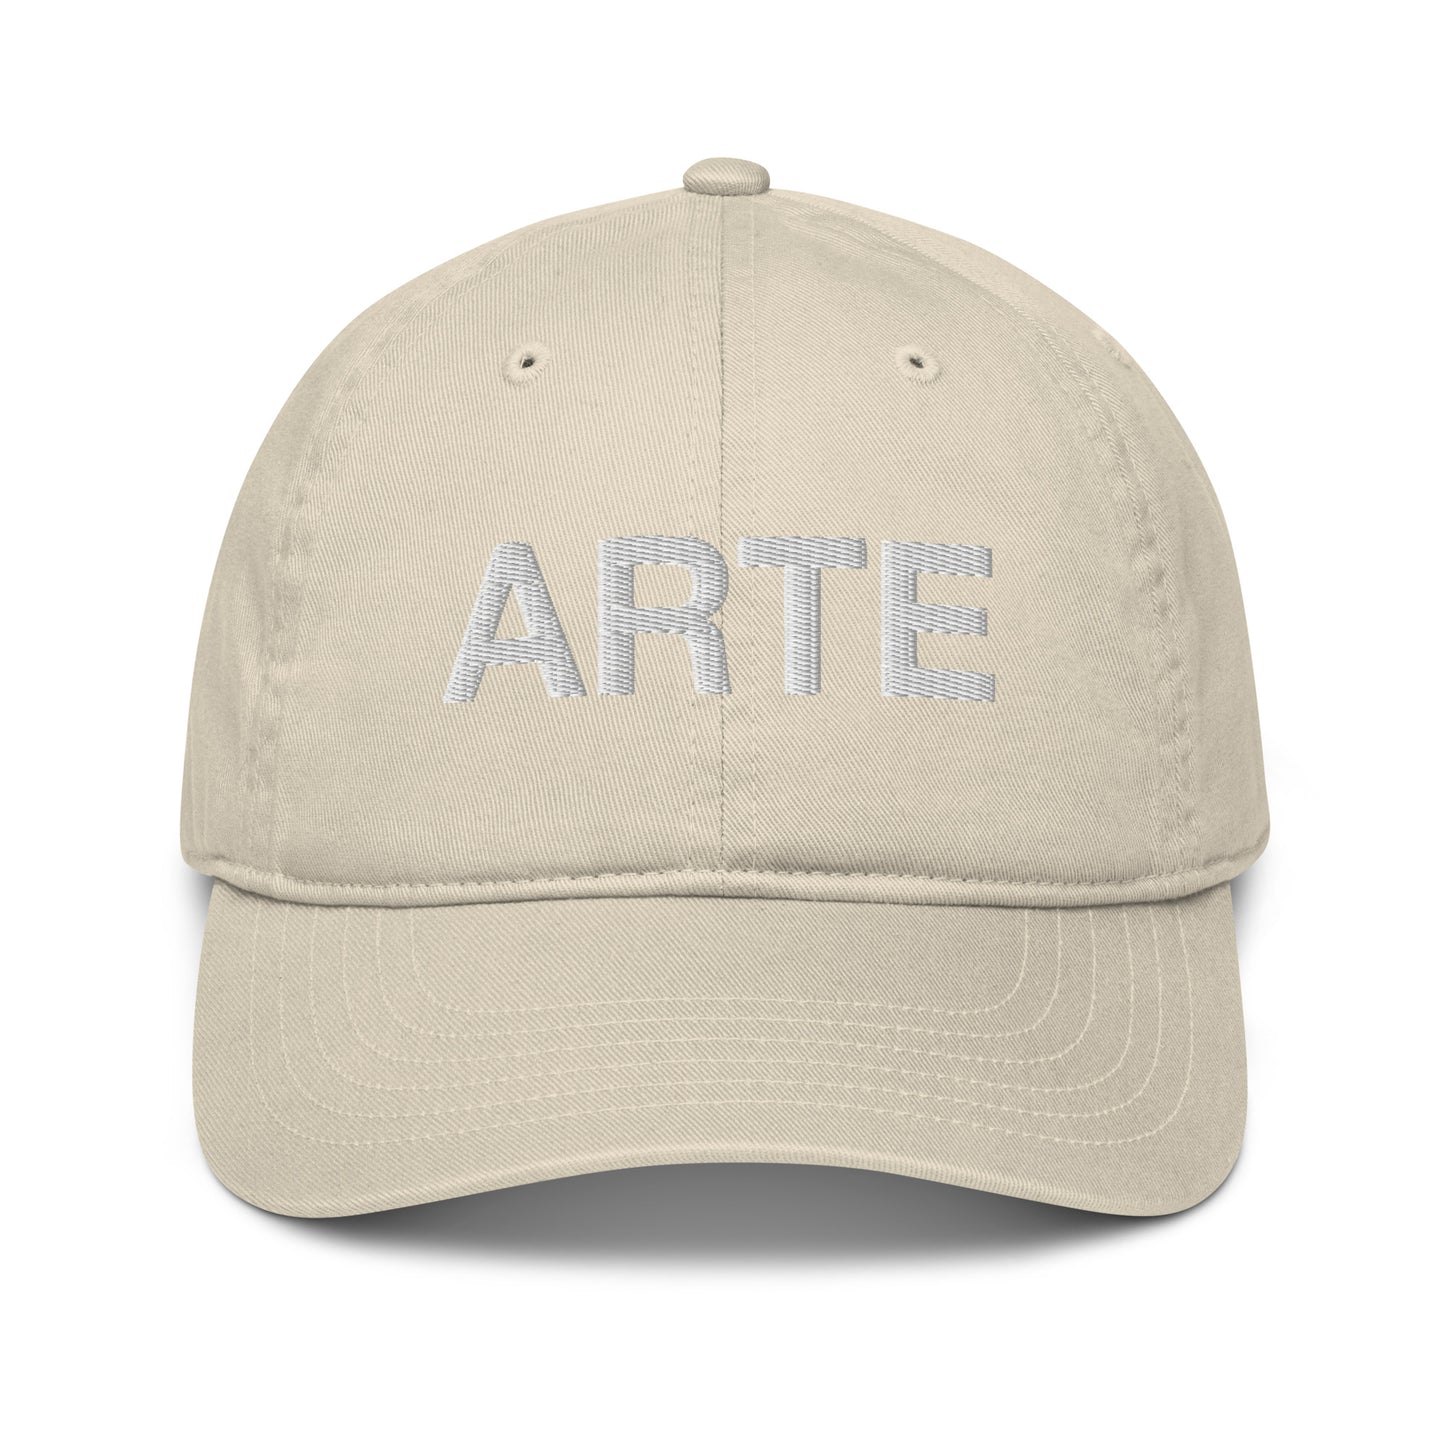 ARTE / dad cap / Beige